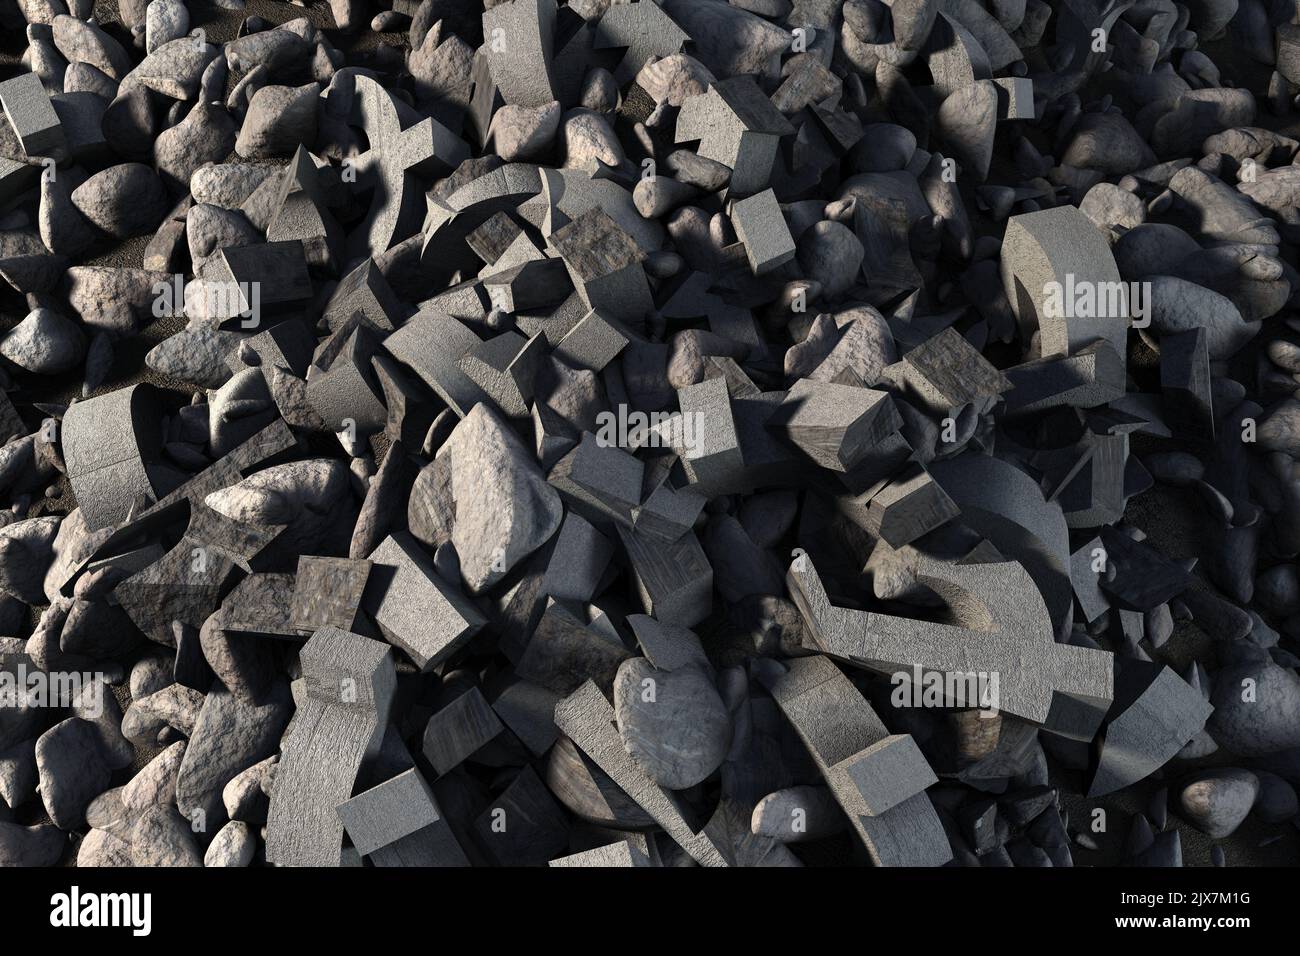 Pile of grey rocks Stock Photo